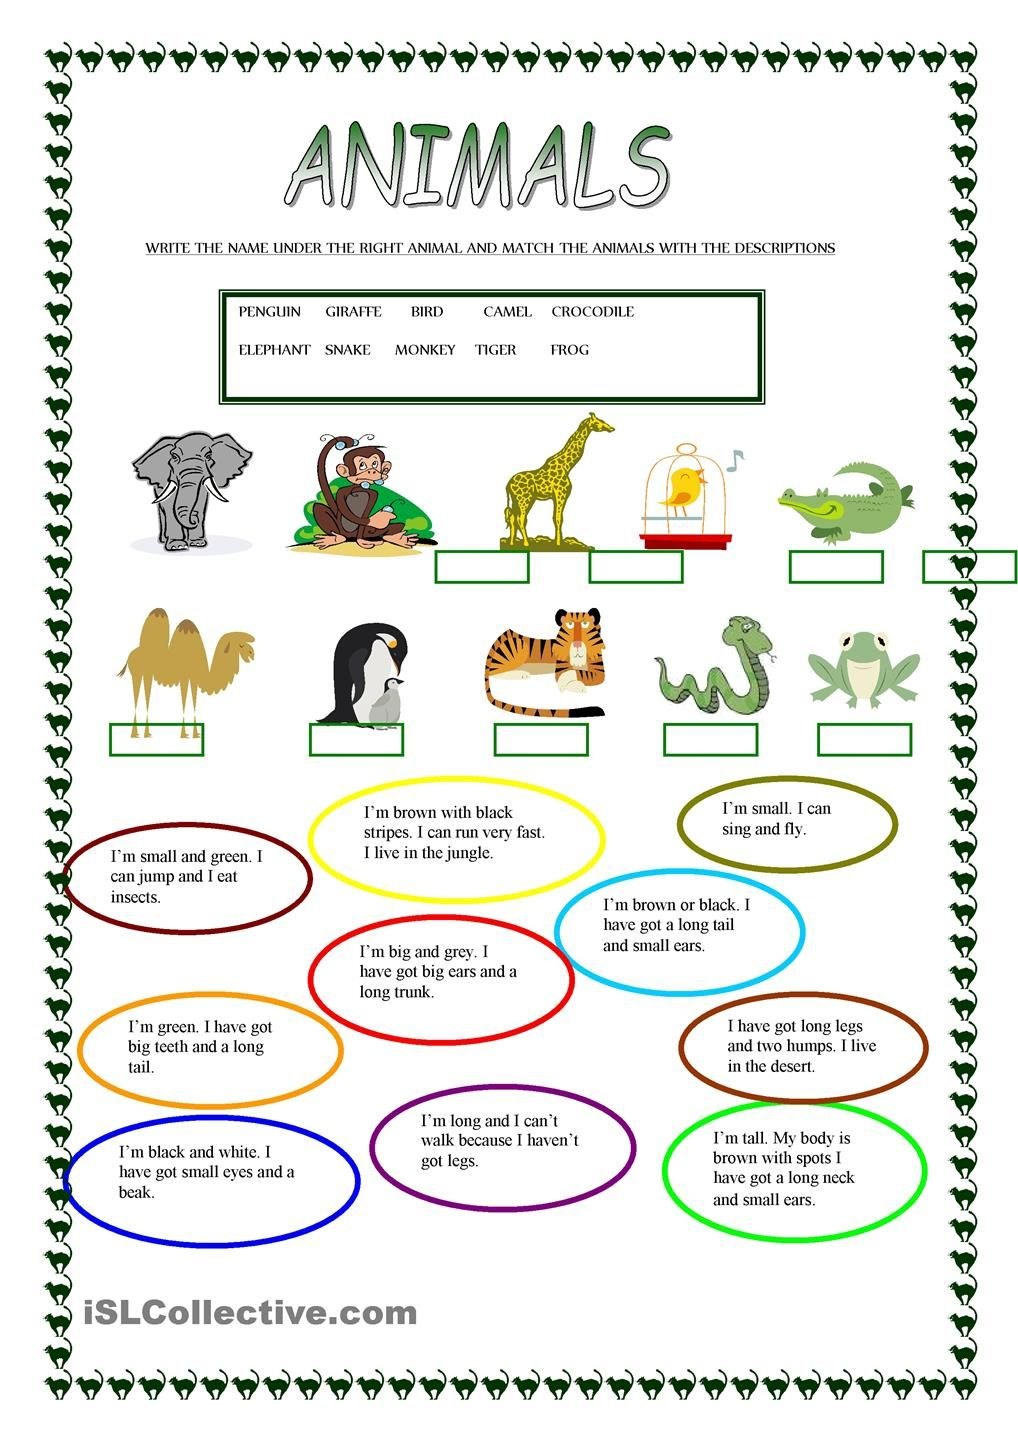 Animals | Free Esl Worksheets | Teachers Resources | Pinterest | Free Printable Esl Worksheets